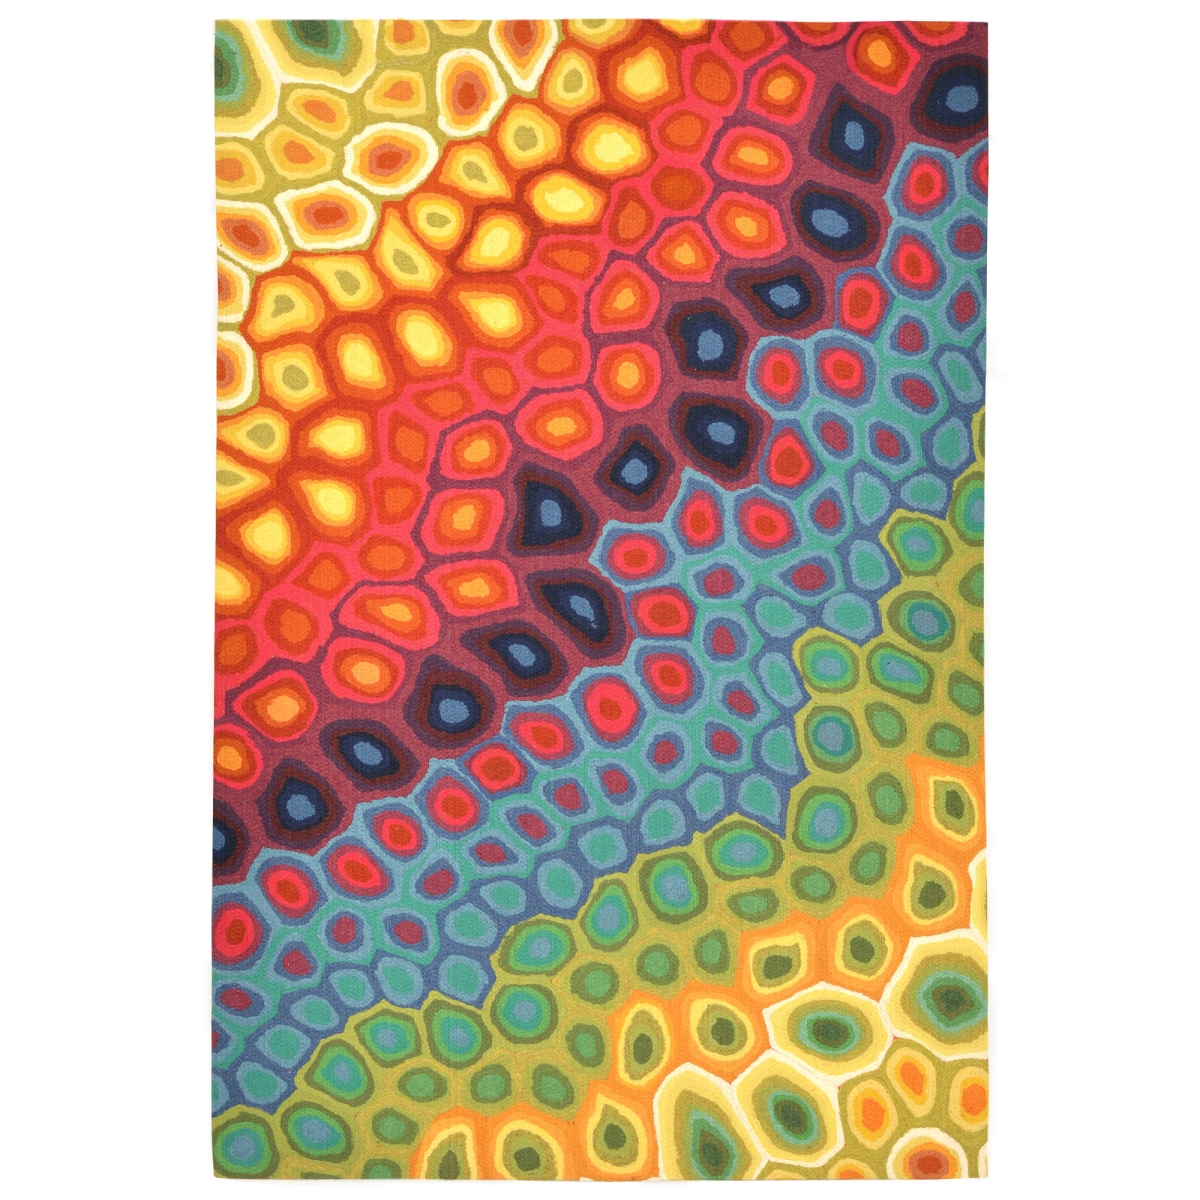 Trans-ocean Imports Ilu12327444 19.5 X 29.5 In. Liora Manne Illusions Pop Swirl Indoor & Outdoor Machine Made Rectangle Mat - Multicolor